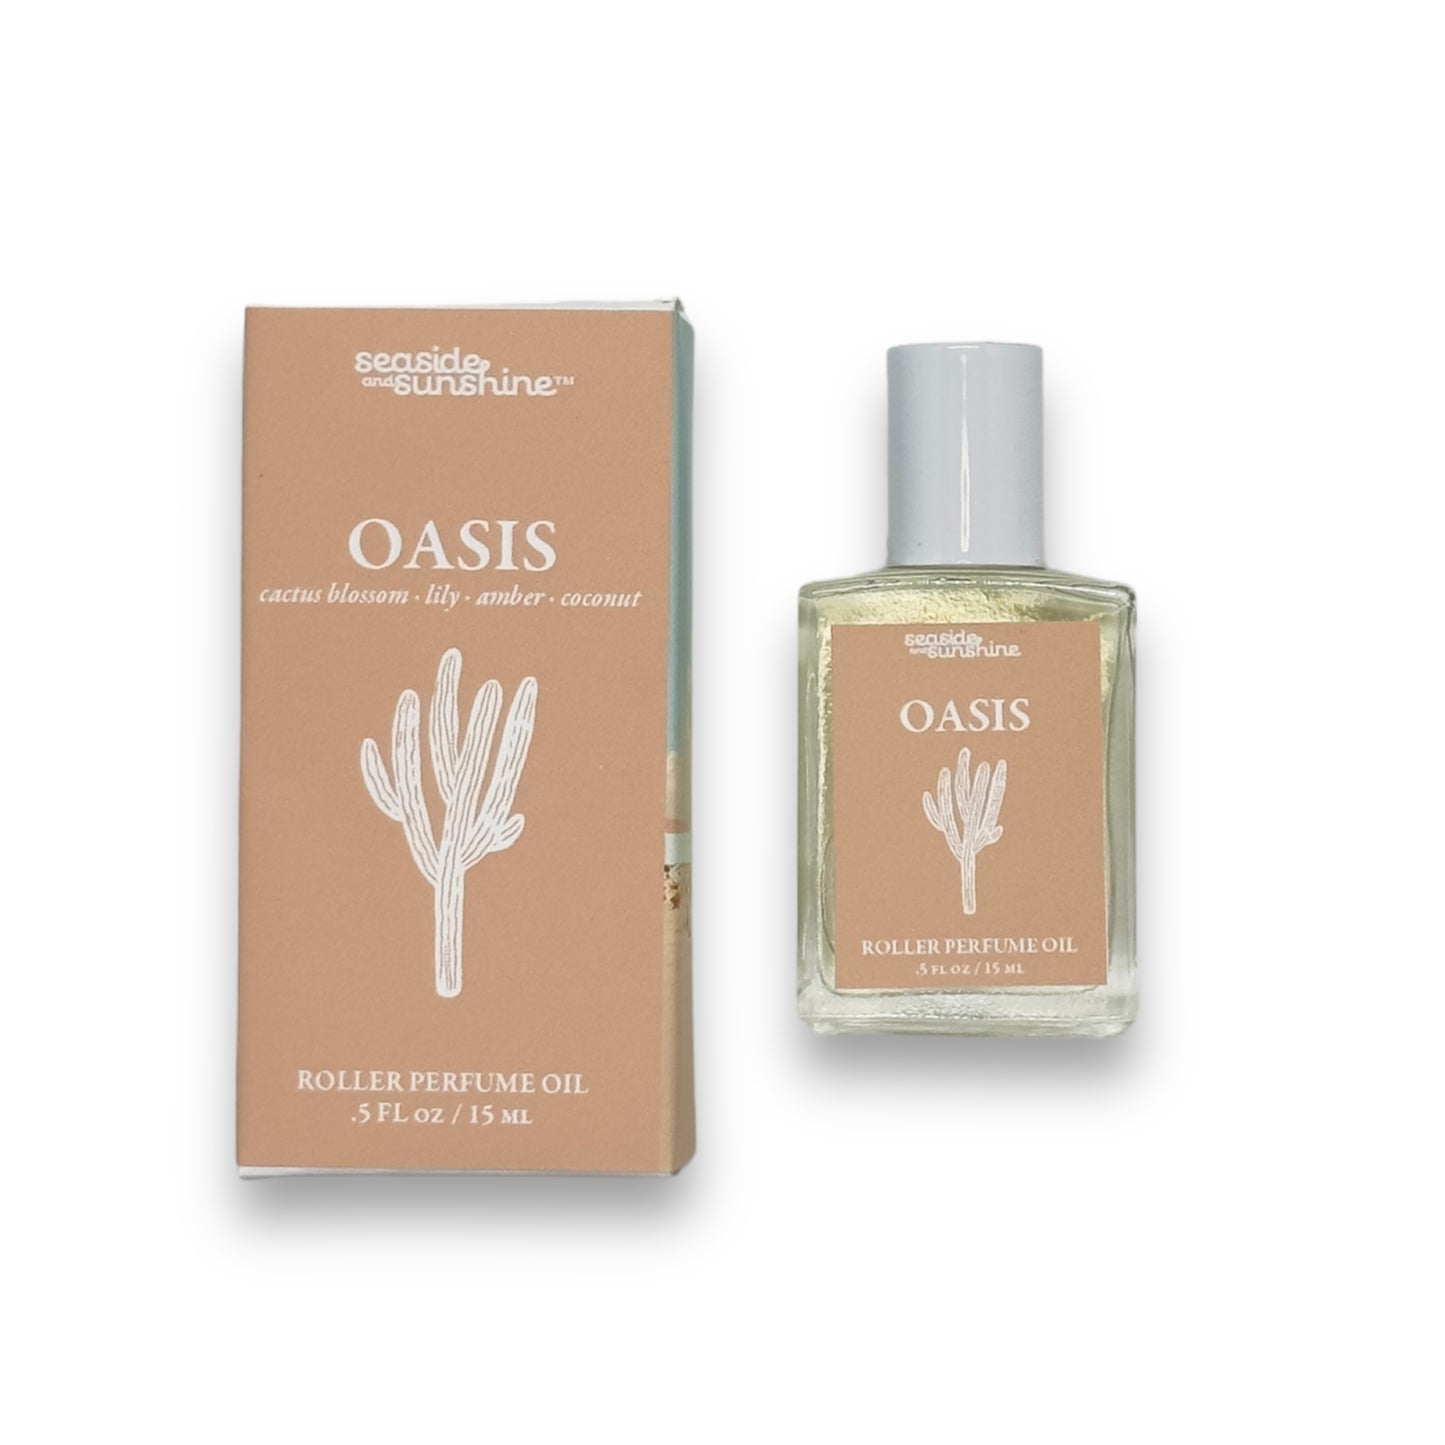 OASIS Roller Perfume